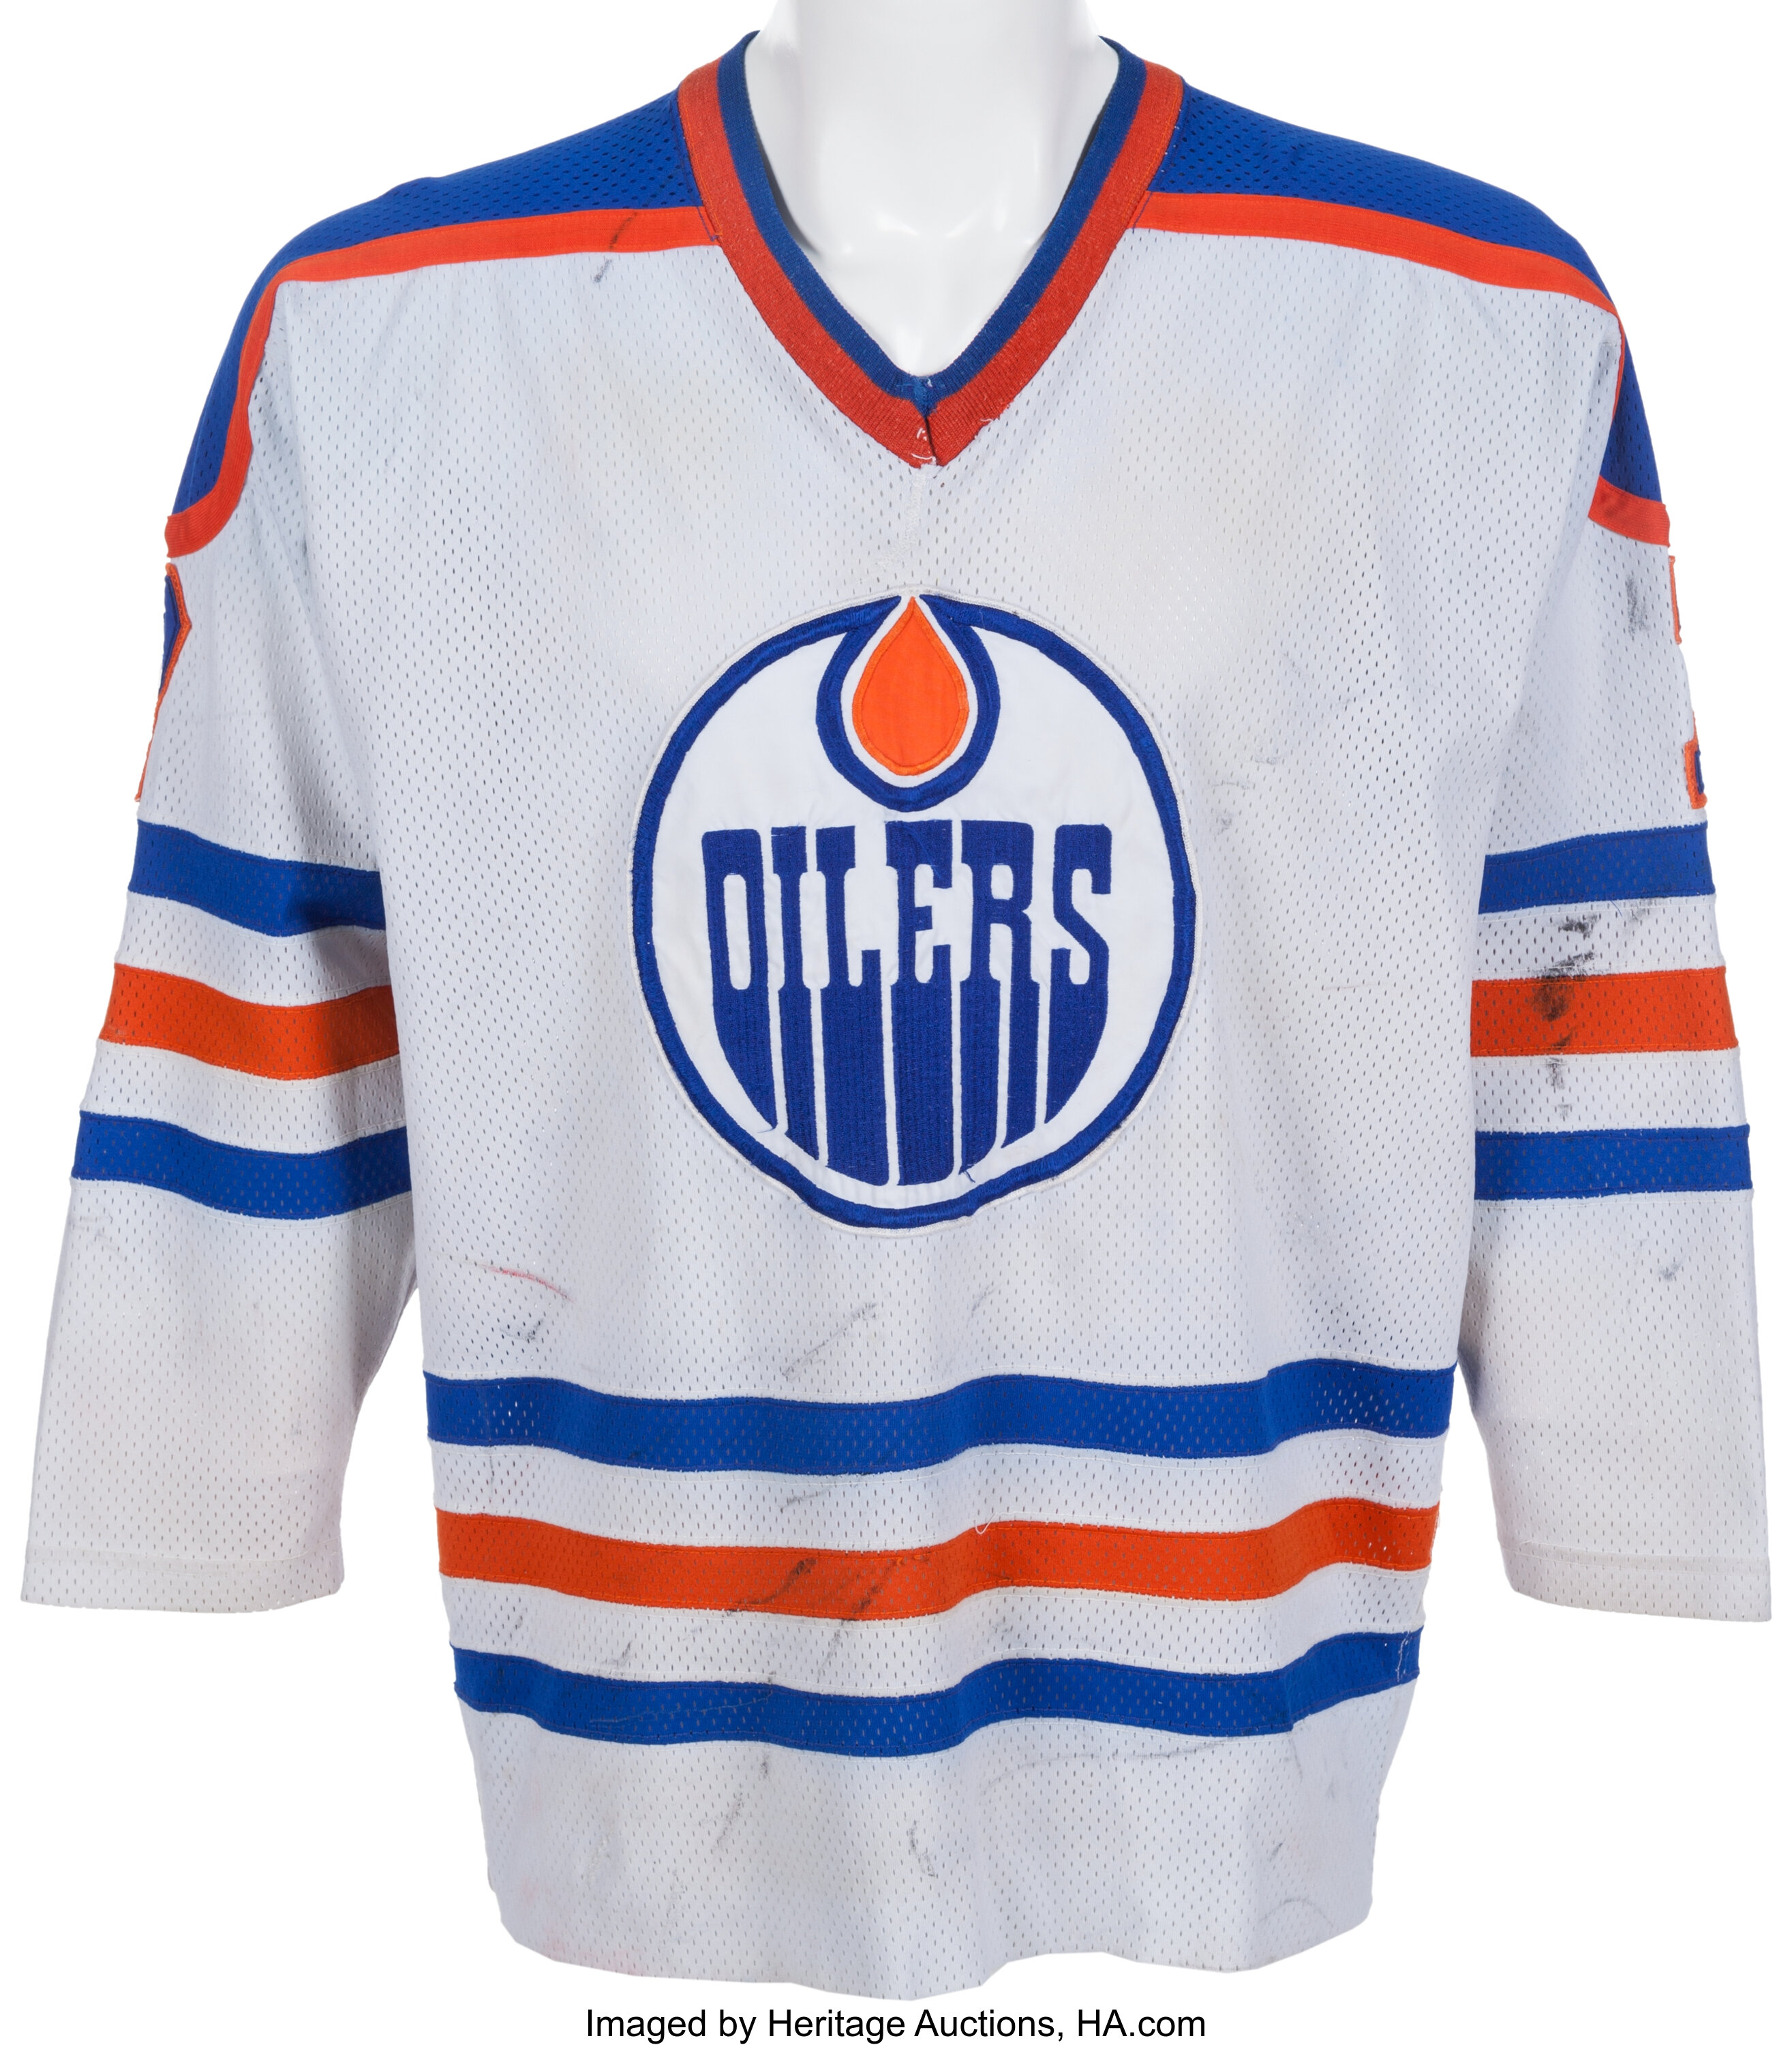 The Paul Coffey Effect - Edmonton Oilers History